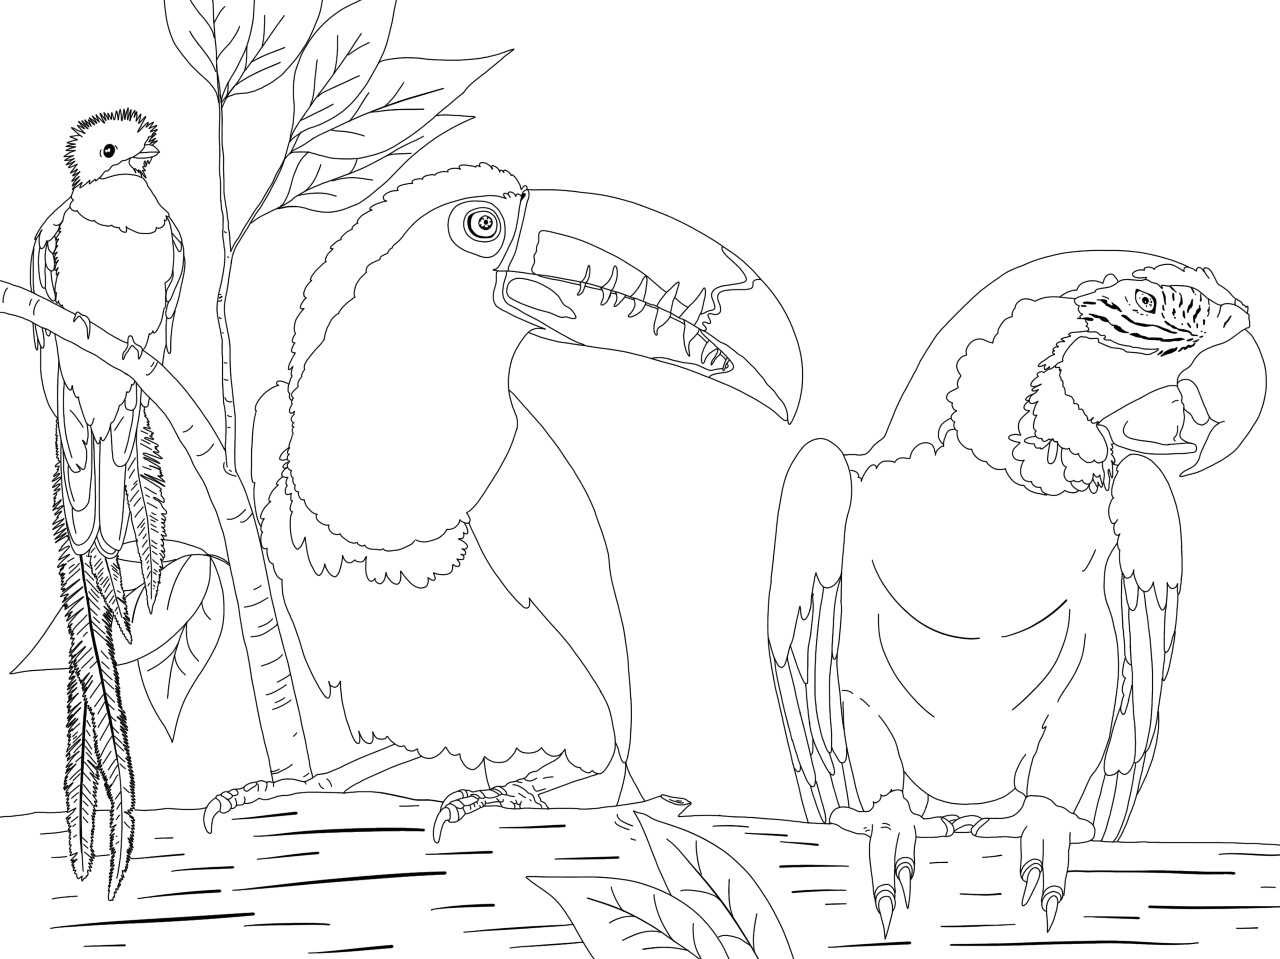 Quetzal, toucan, parrot